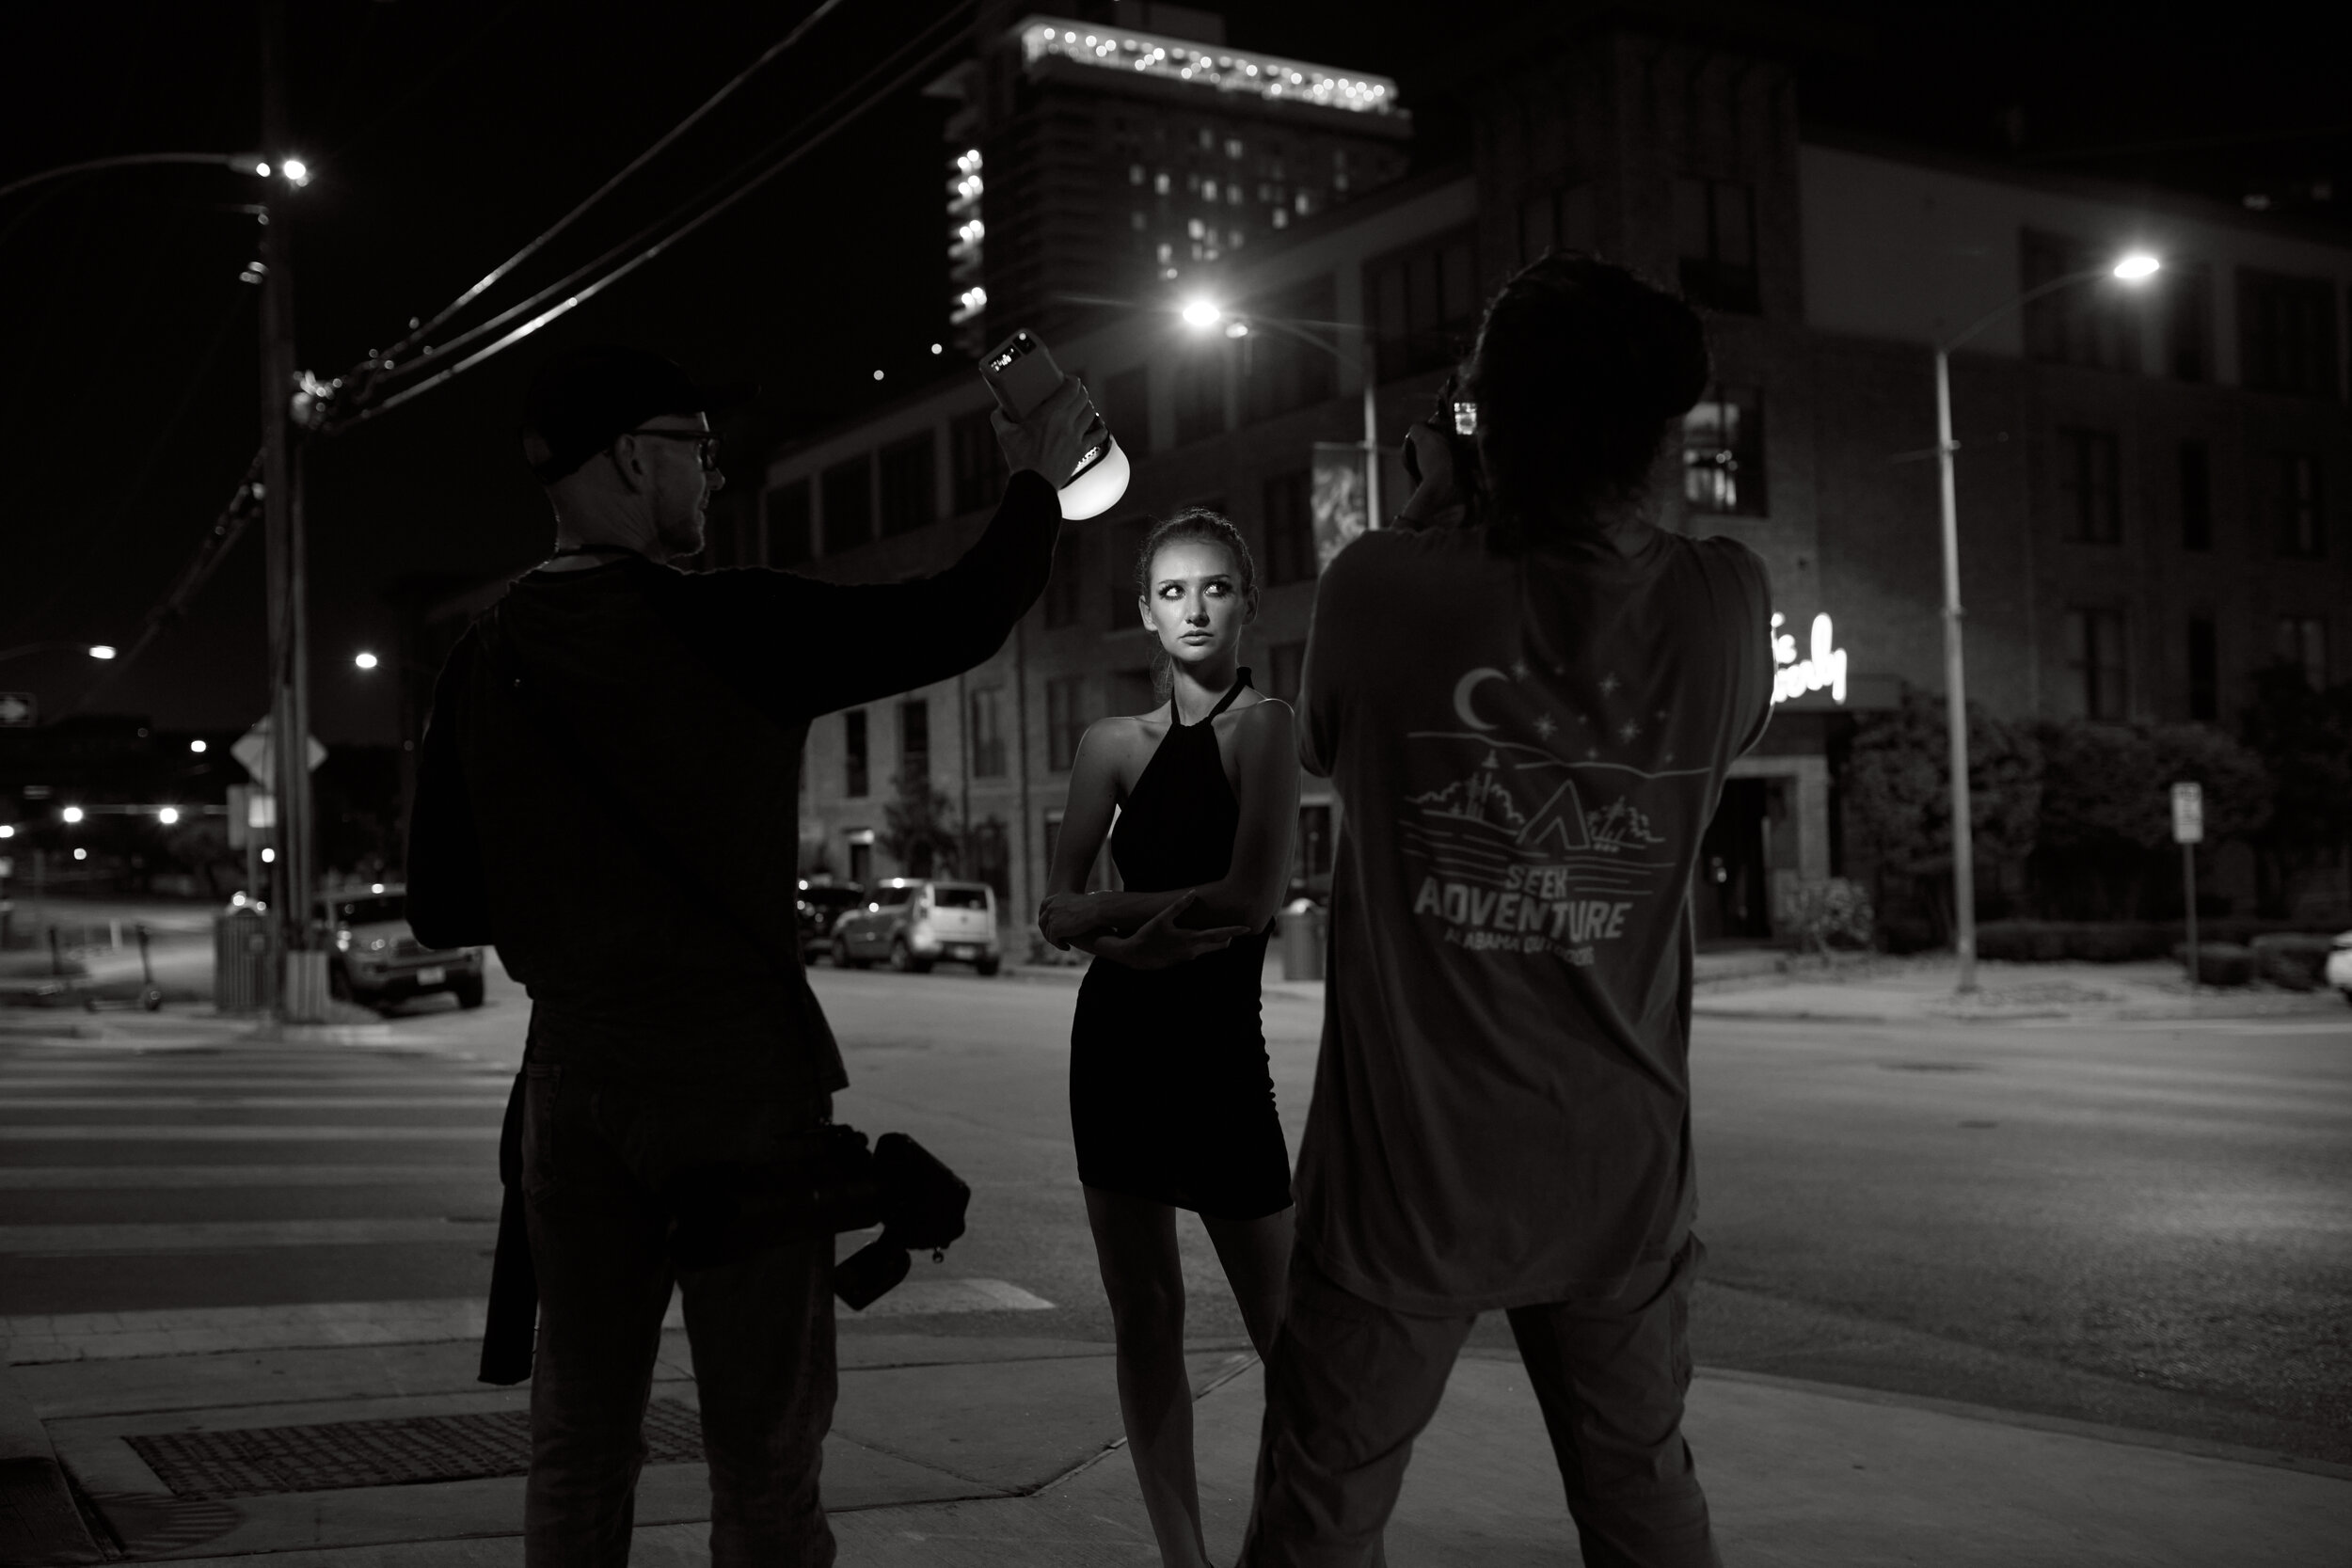 Capturing 2am street photography